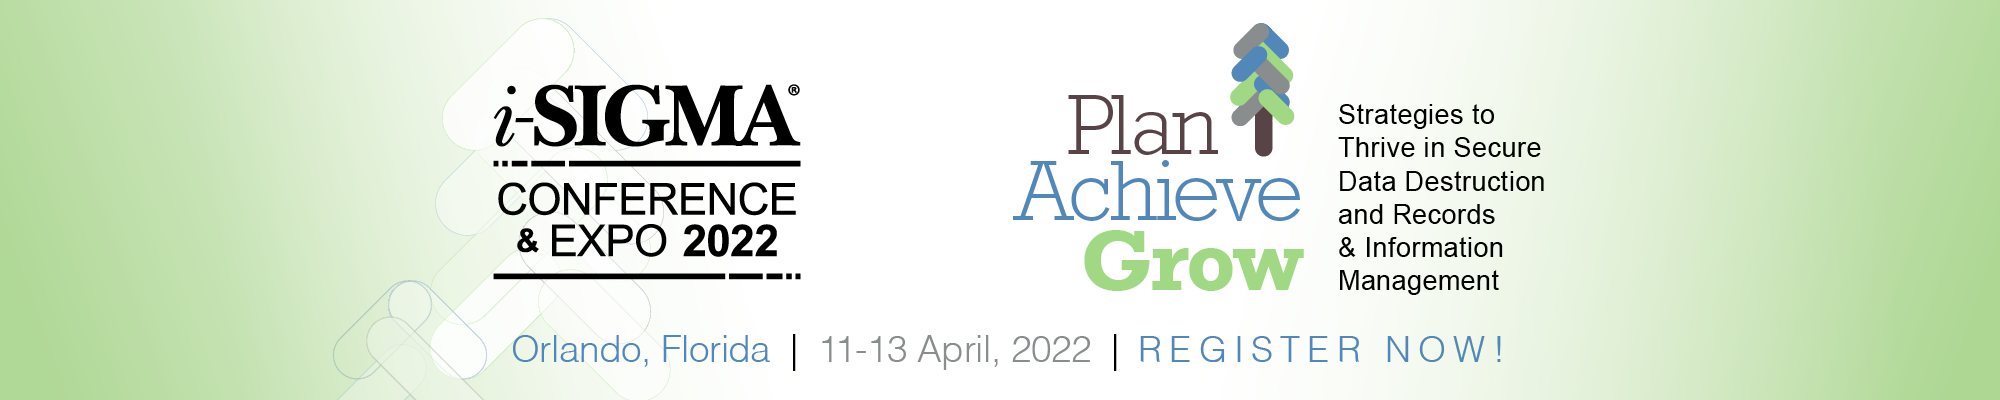 Plan. Achieve. Grow. Conference theme